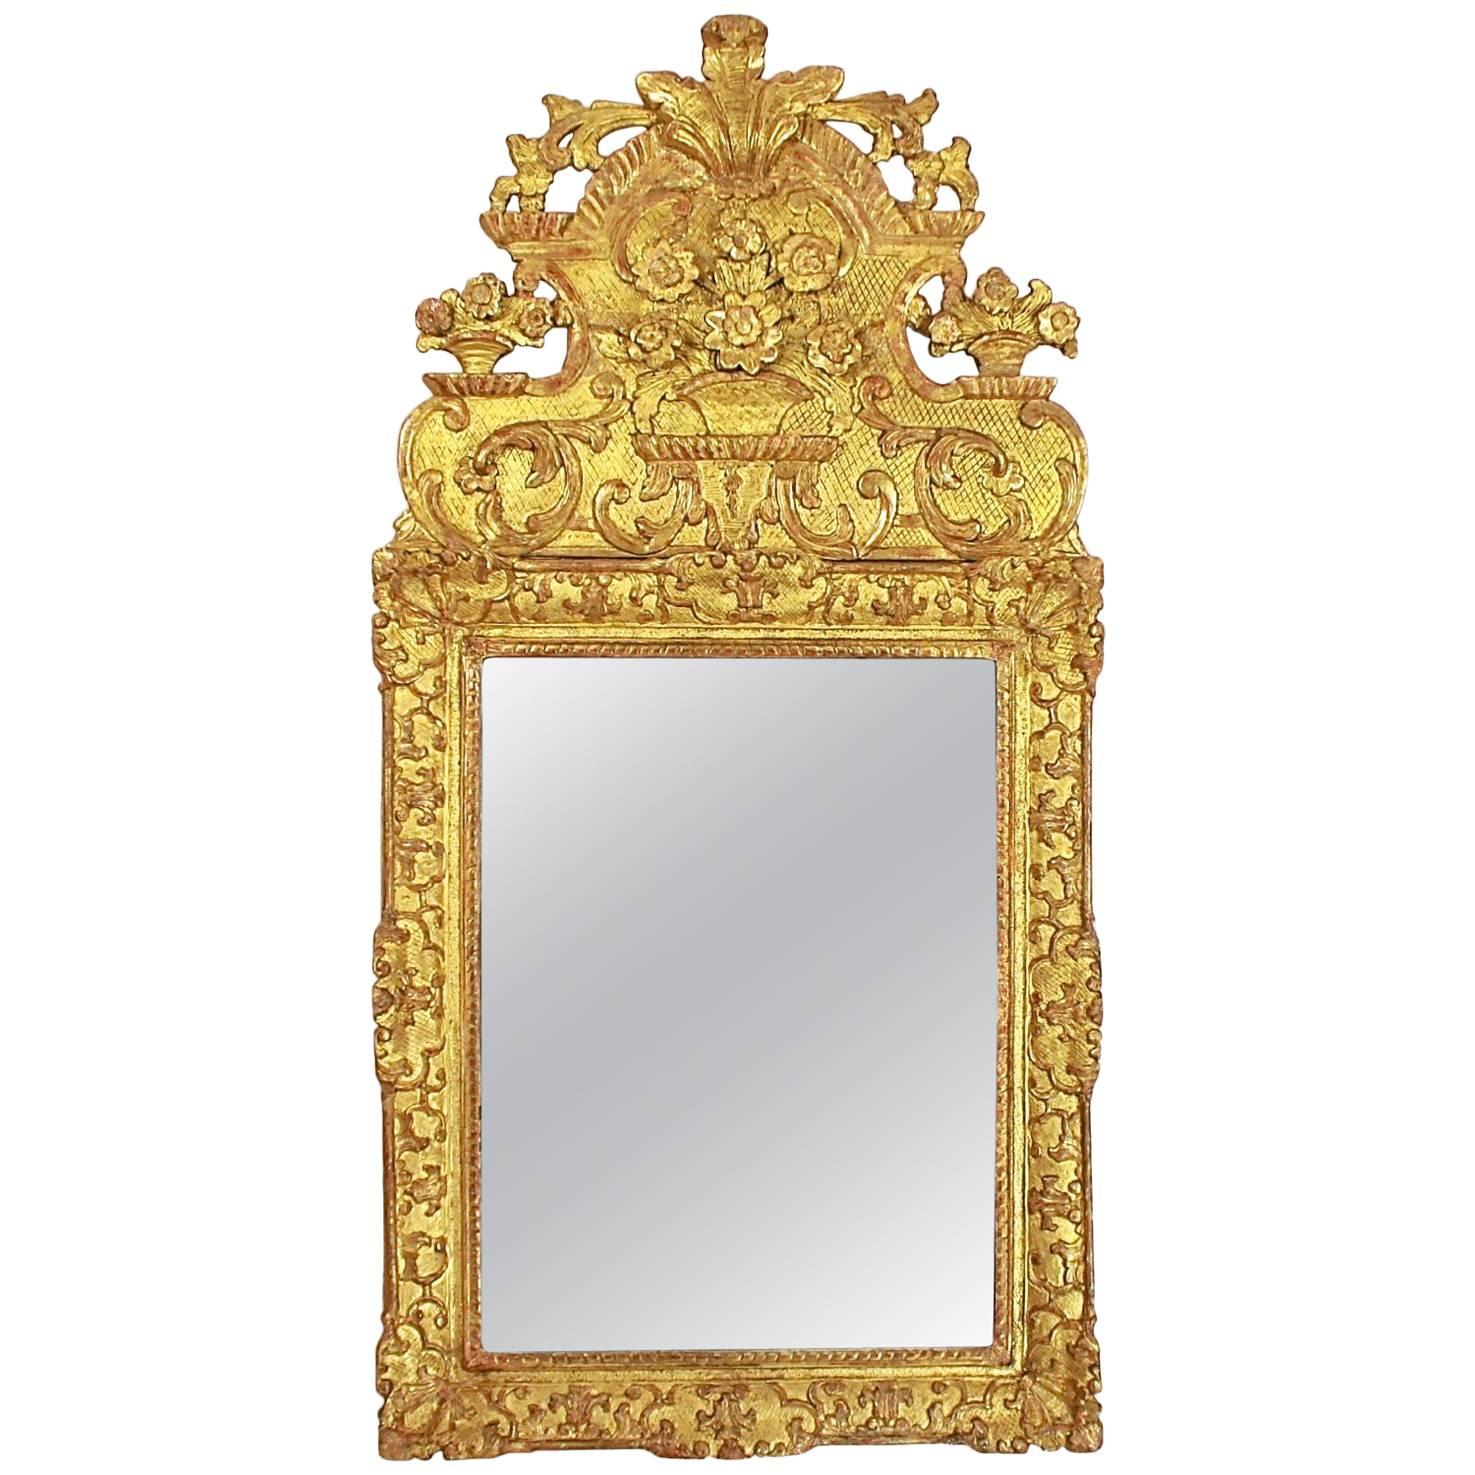 Early 18th Century Regence Giltwood Mirror